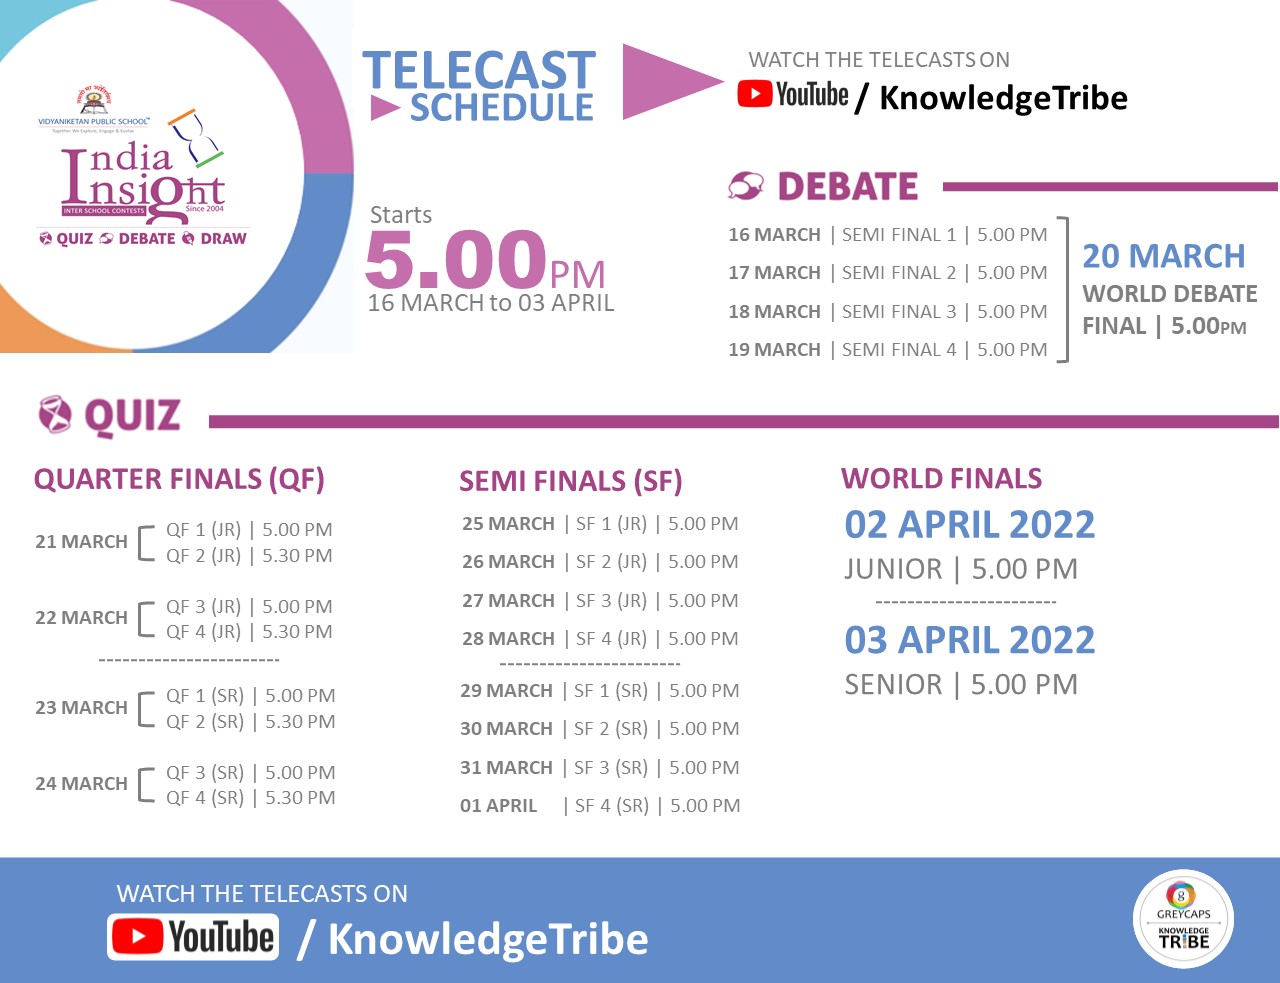 India Insight Telecast Schedule 2022